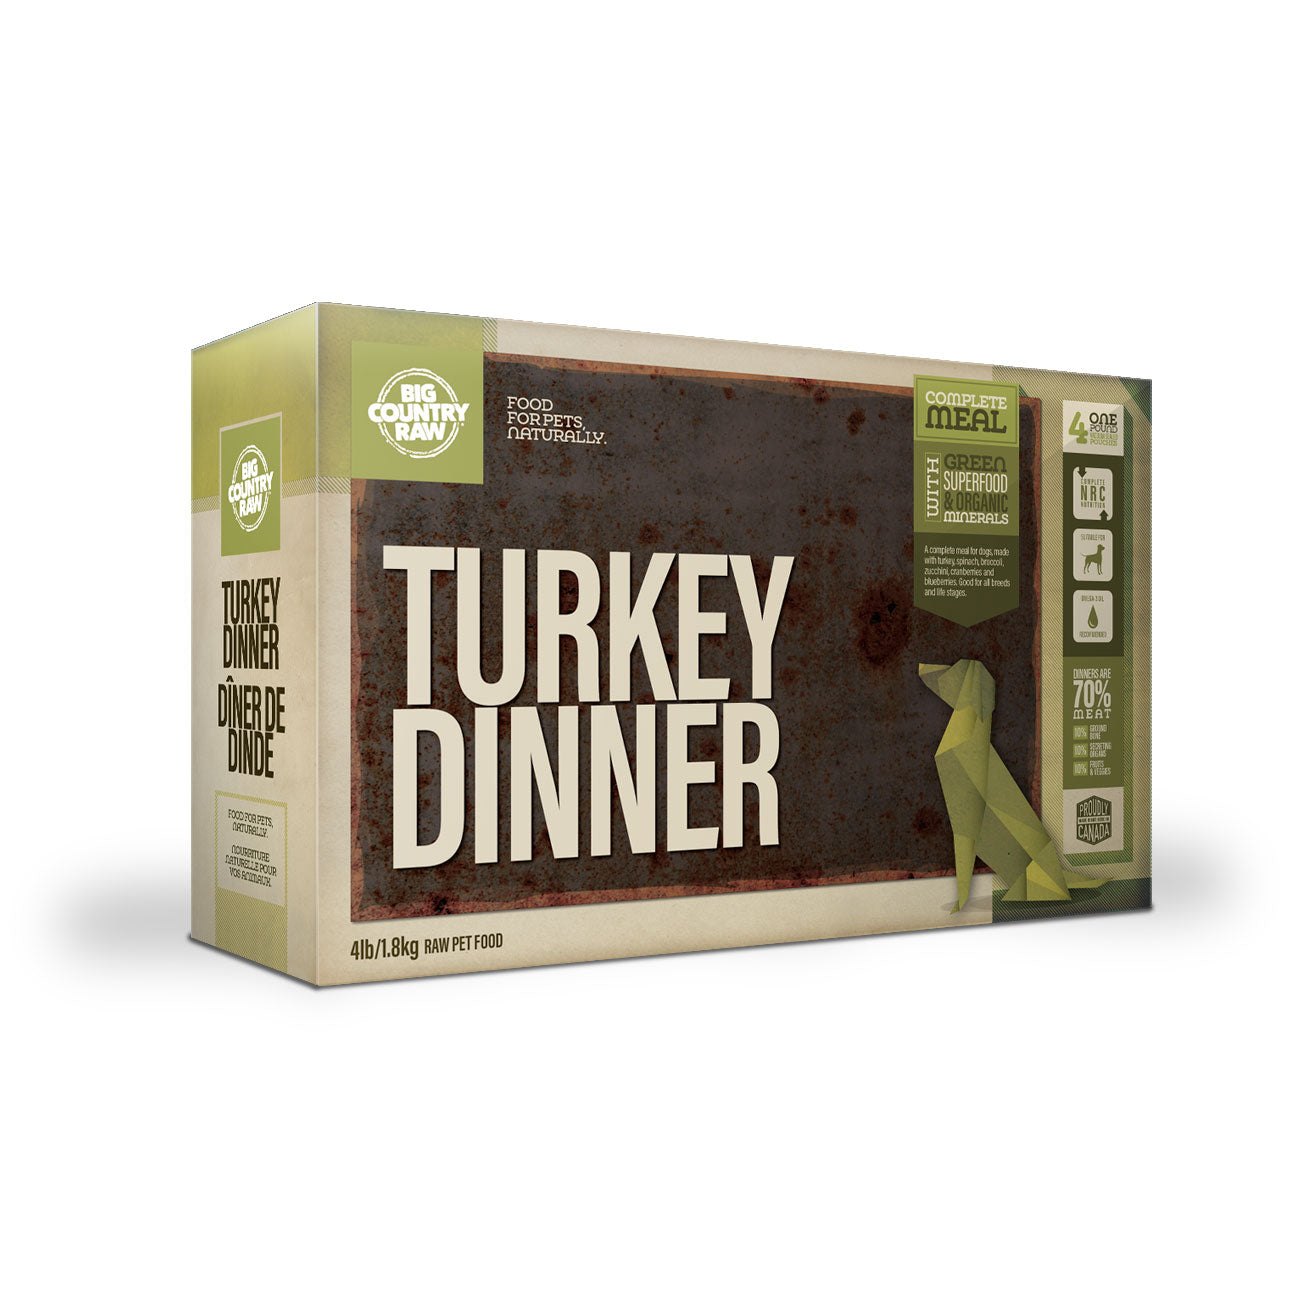 BIG COUNTRY RAW DINNER CARTON - TURKEY